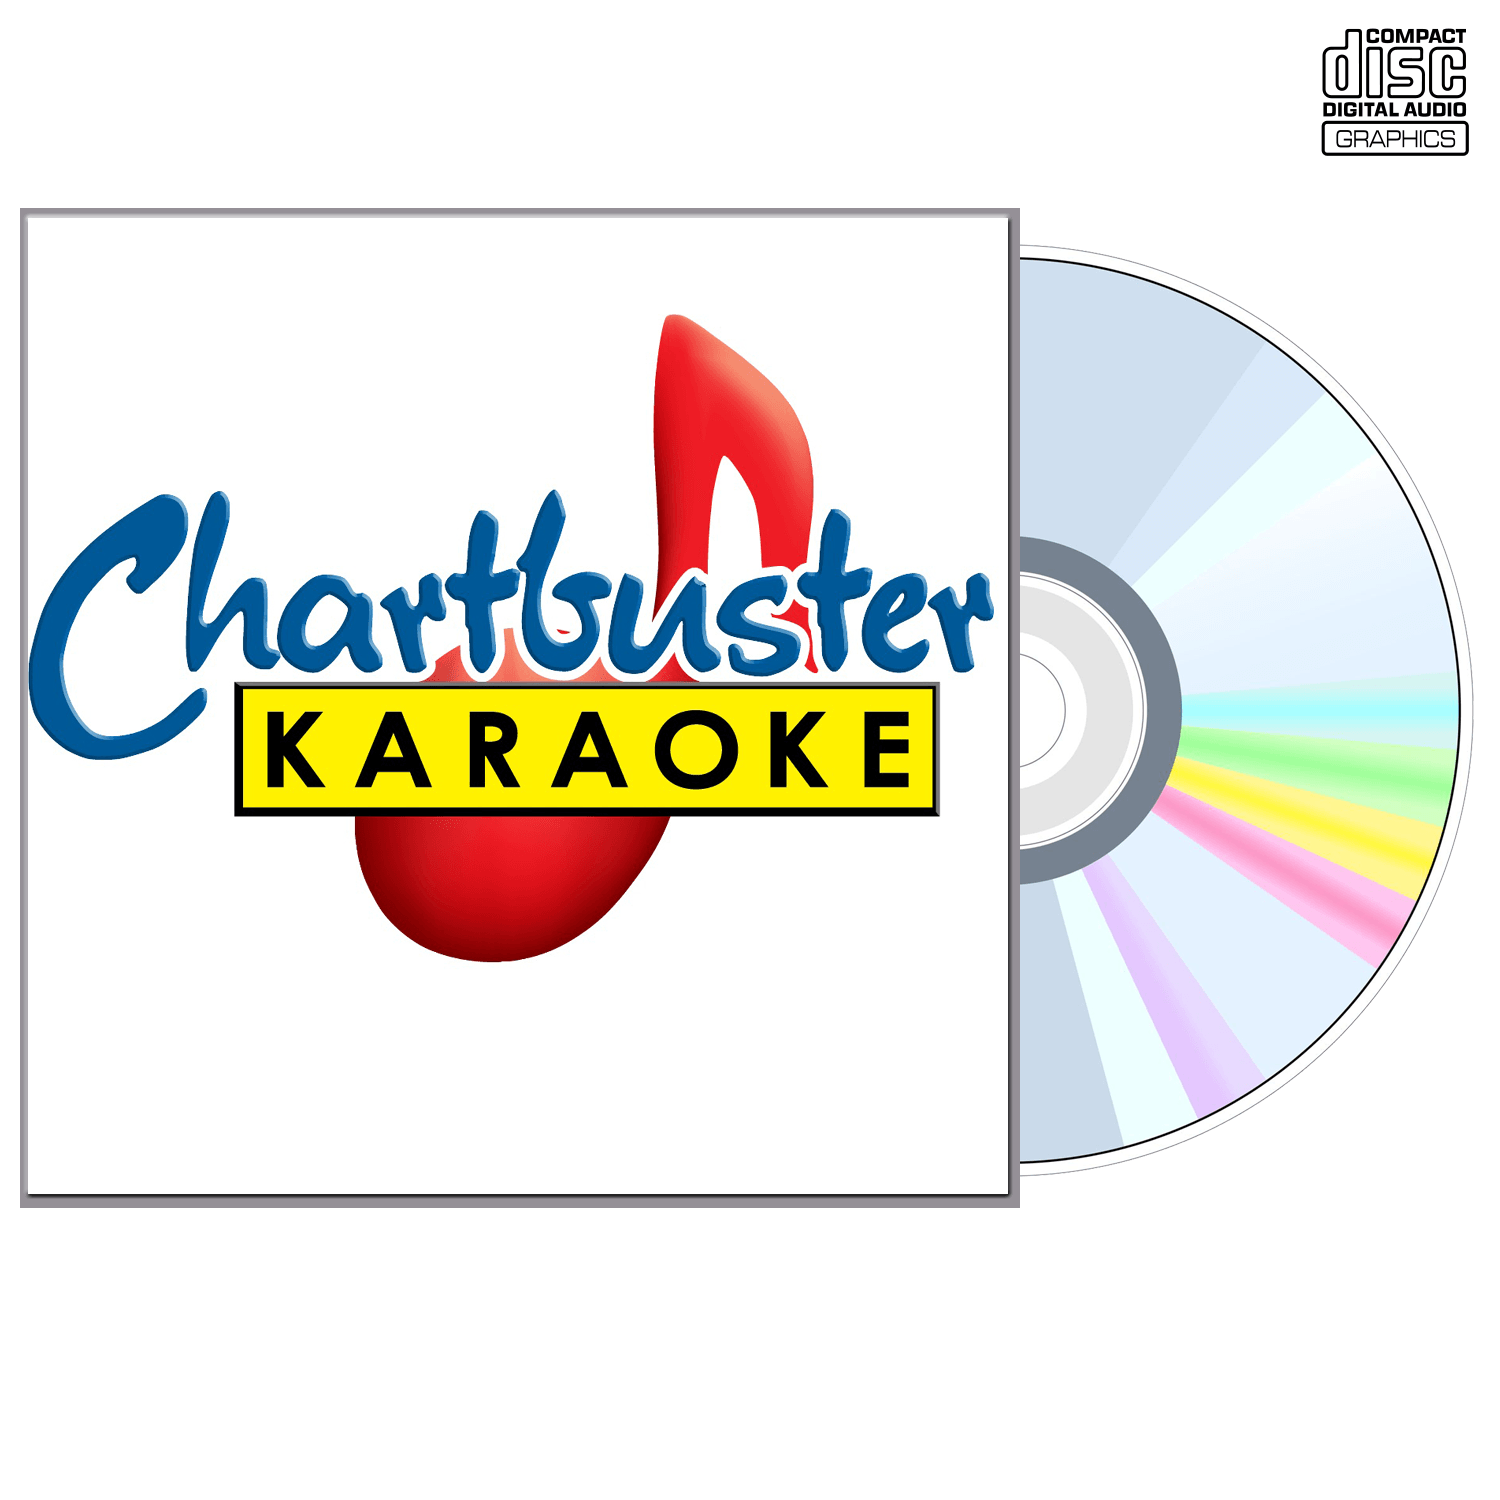 Trisha Yearwood Vol 2 - CD+G - Chartbuster Karaoke - Karaoke Home Entertainment